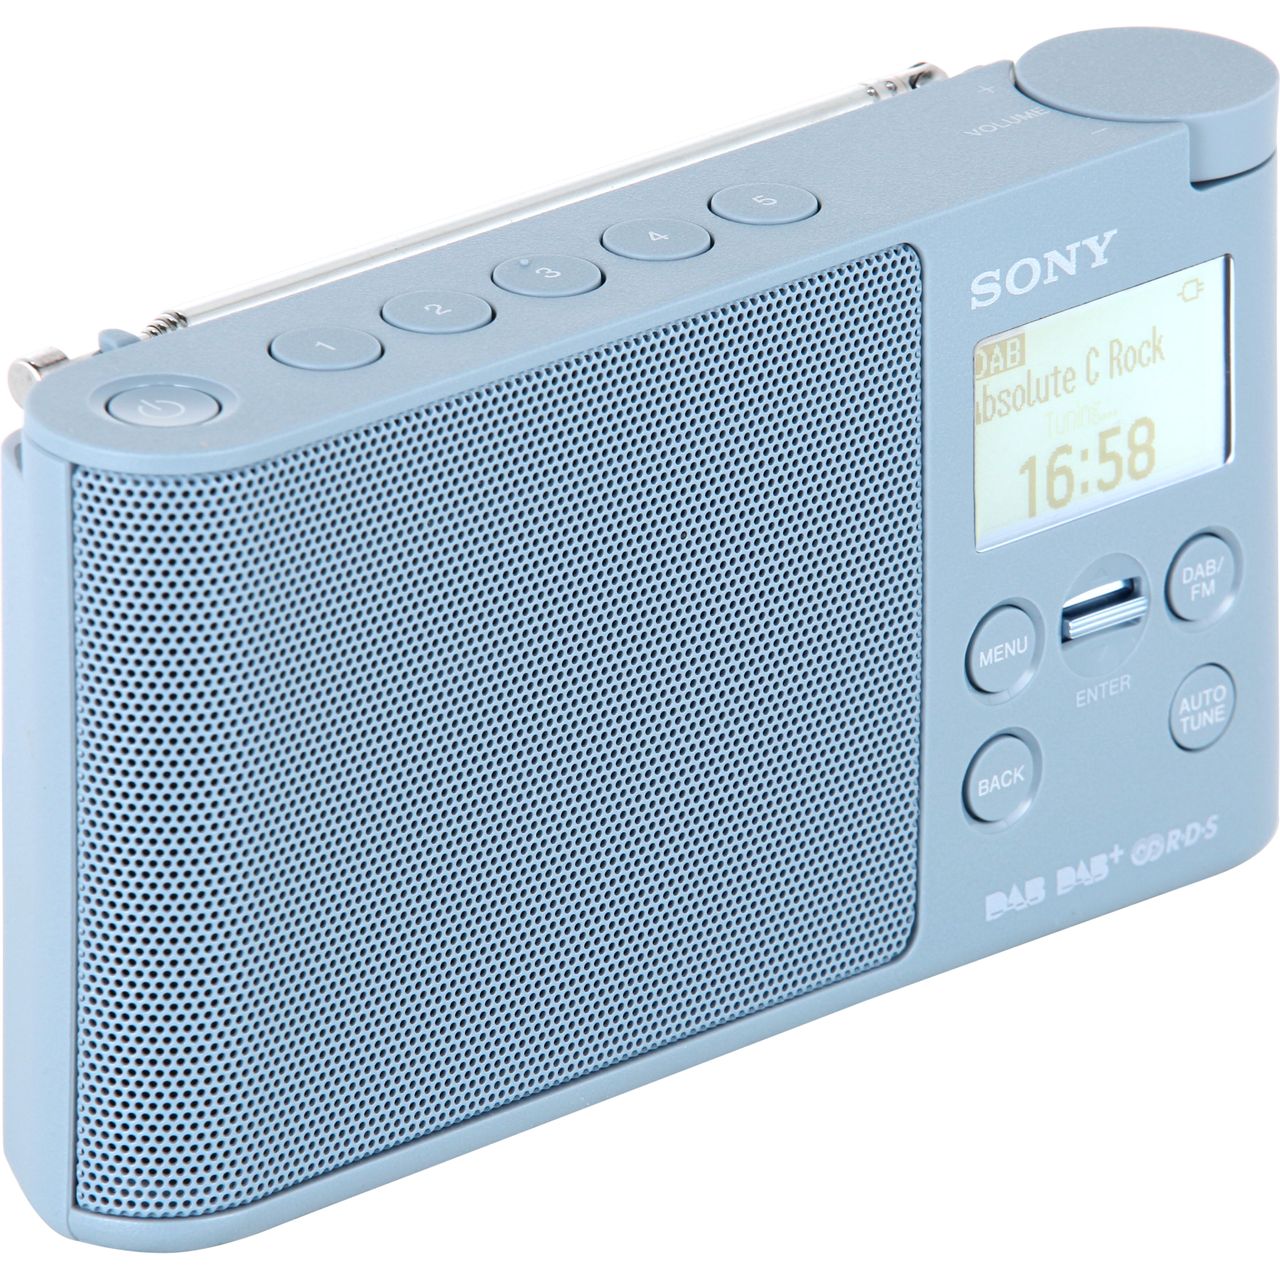 Sony XDRS41DL.CEK DAB / DAB+ Digital Radio with FM Tuner Review